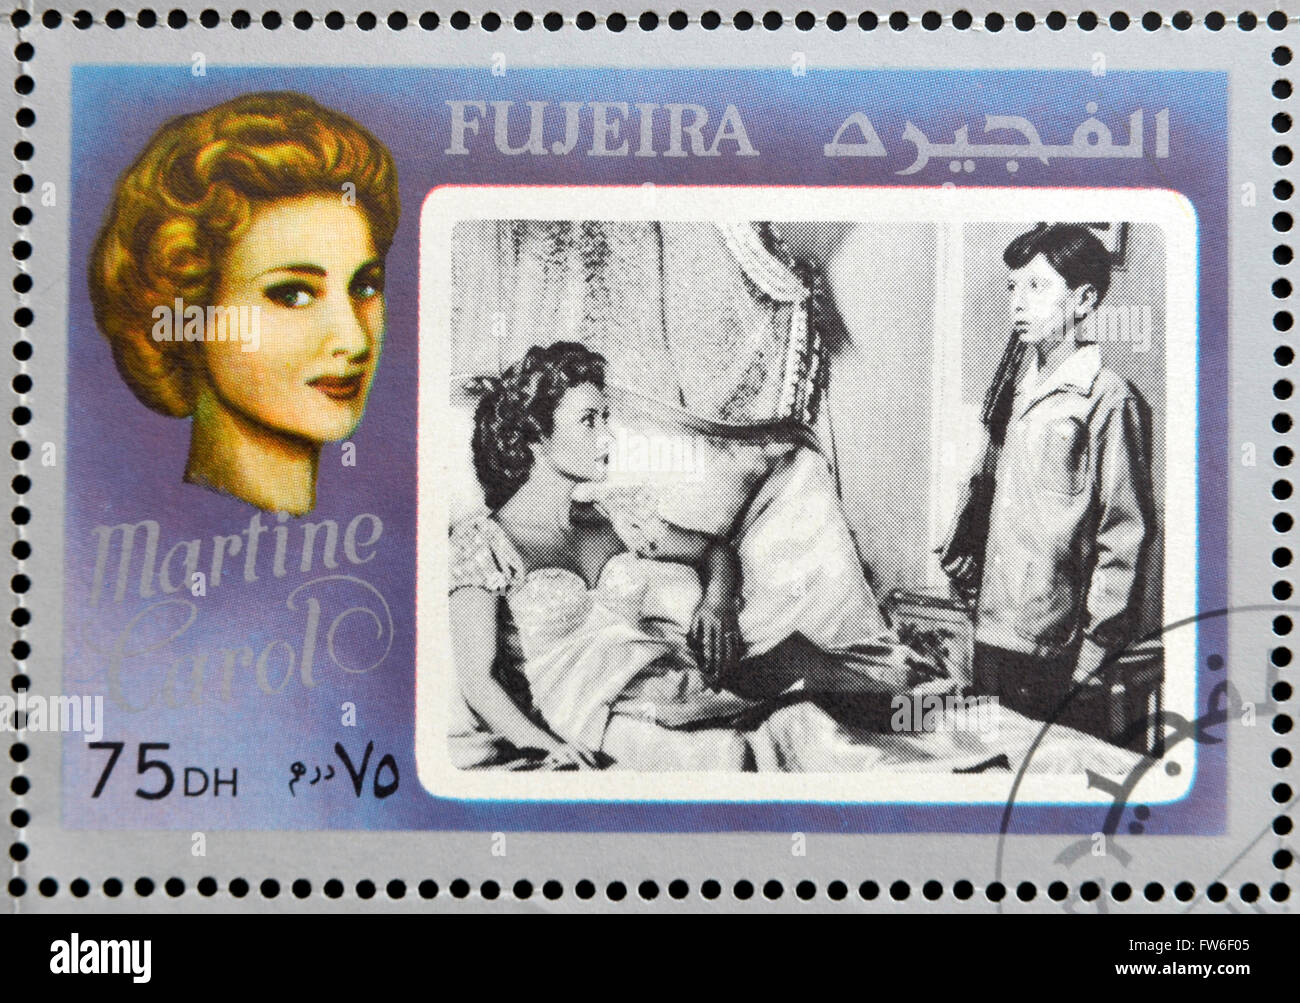 FUJEIRA - circa 1972 : timbres en Fujeira montre l'actrice française Martine Carol, vers 1972 Banque D'Images